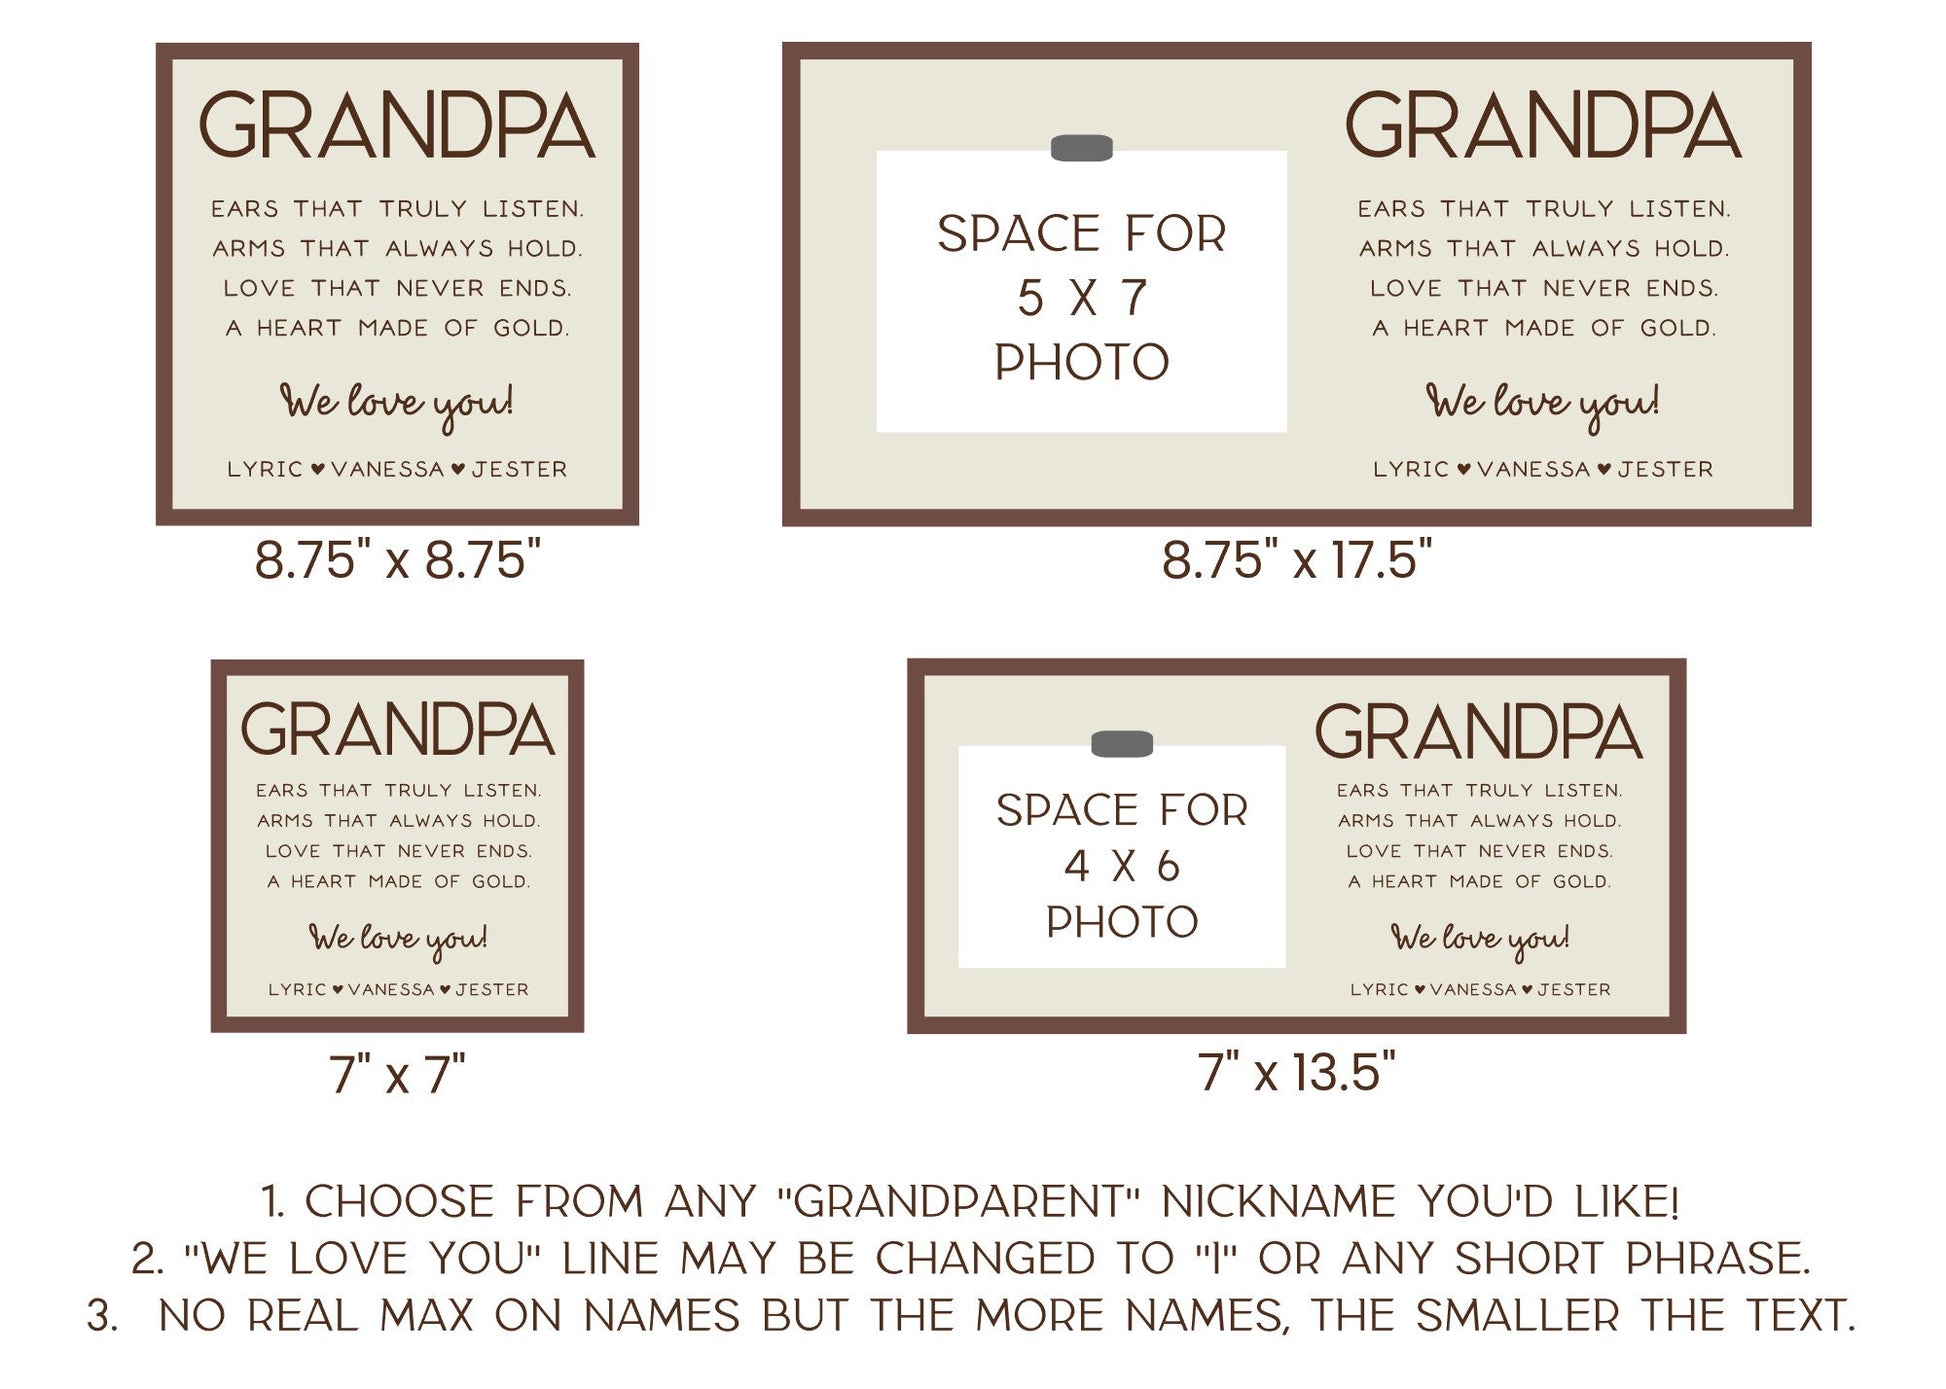 Grandpa Photo Frame from Grandkids, Grandma Grandpa Picture Holder, Customized Grandparents Sign